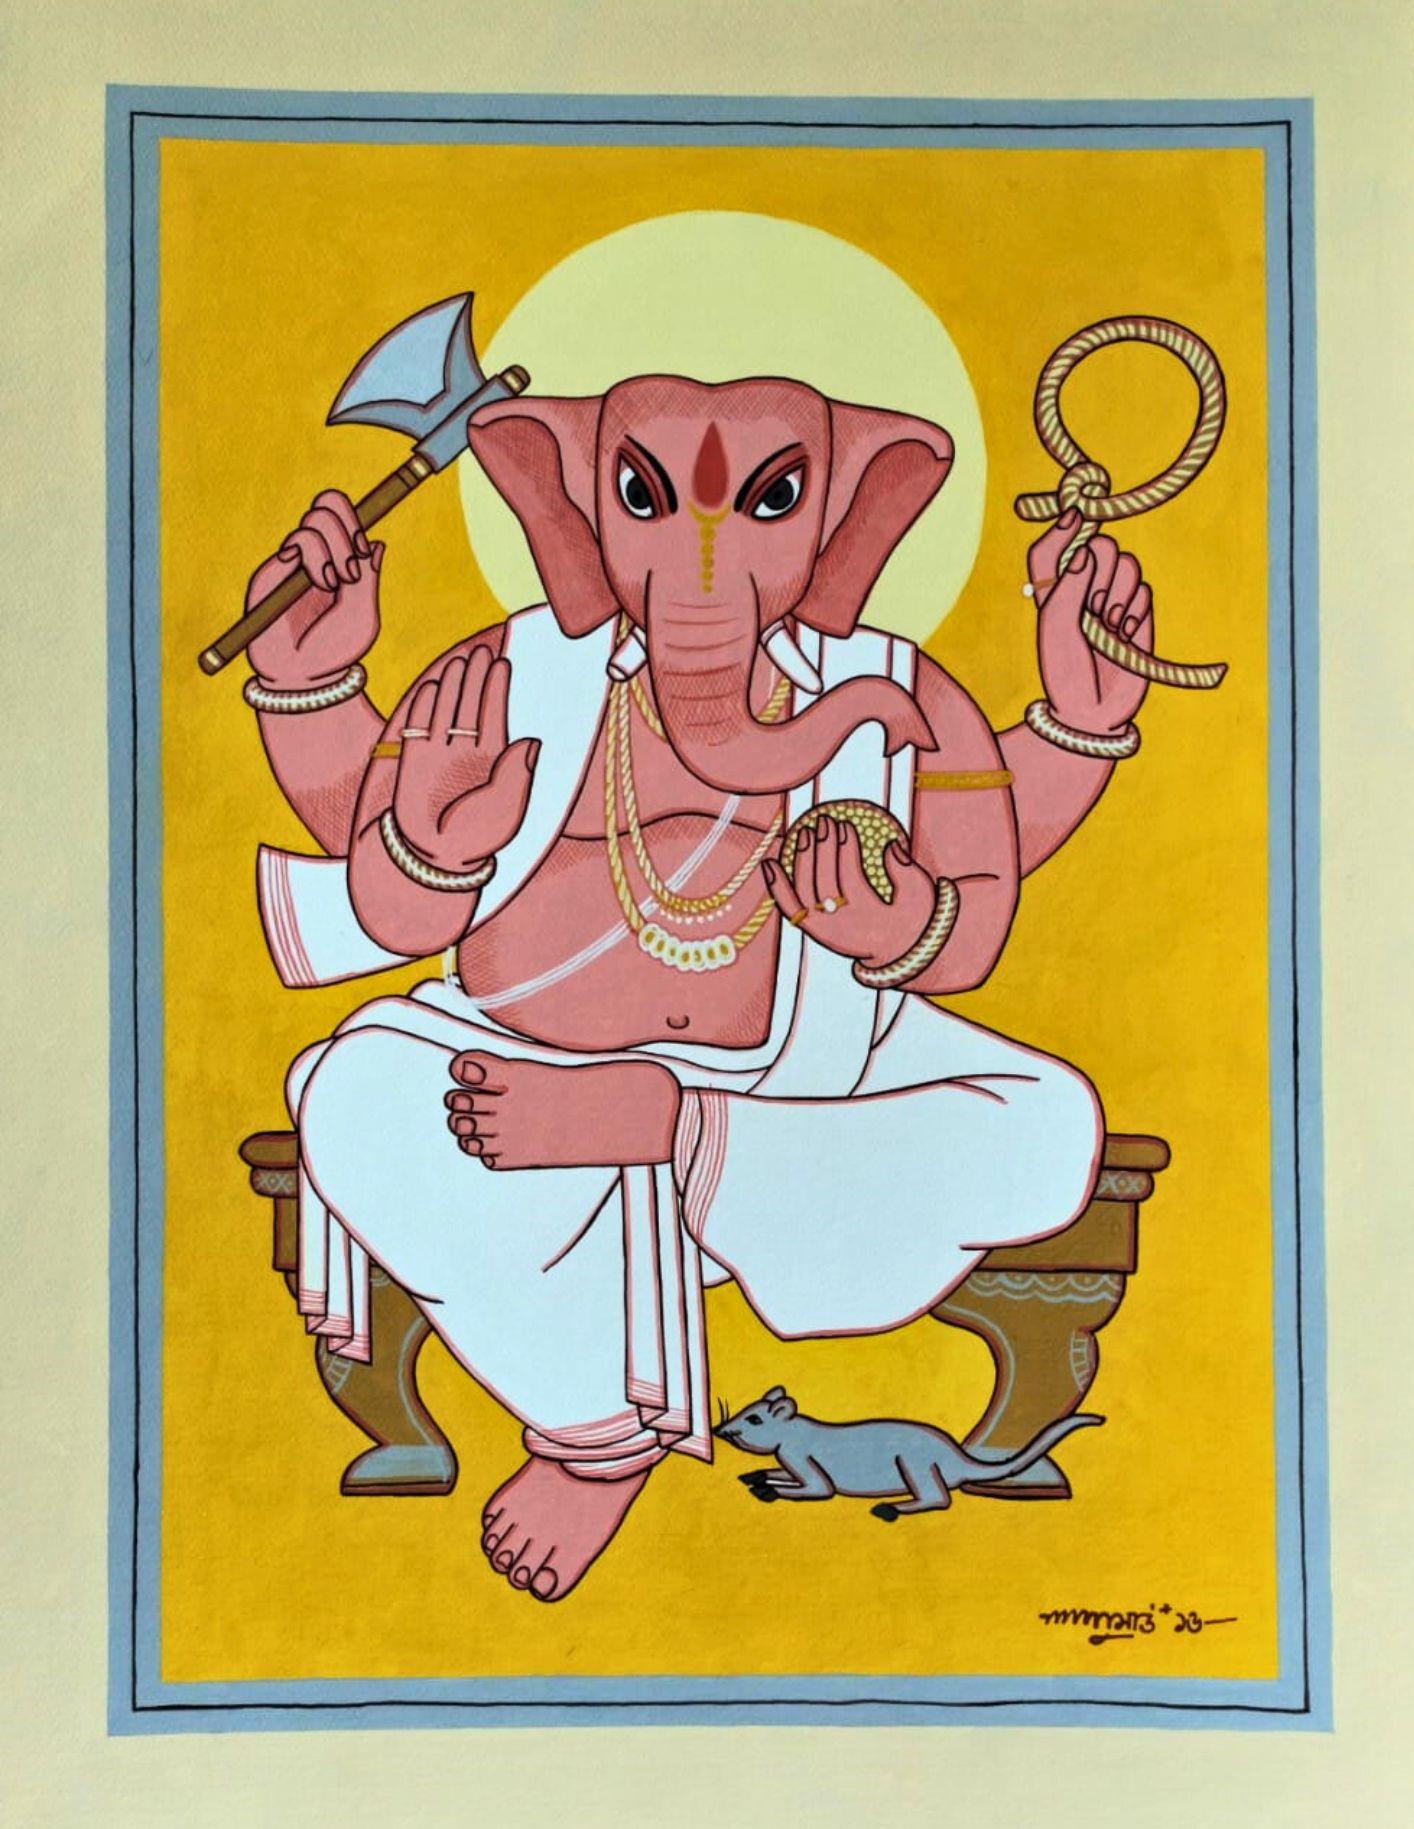 Ganesha, Tempera sur panneau par Lalu Prasad Shaw, en stock